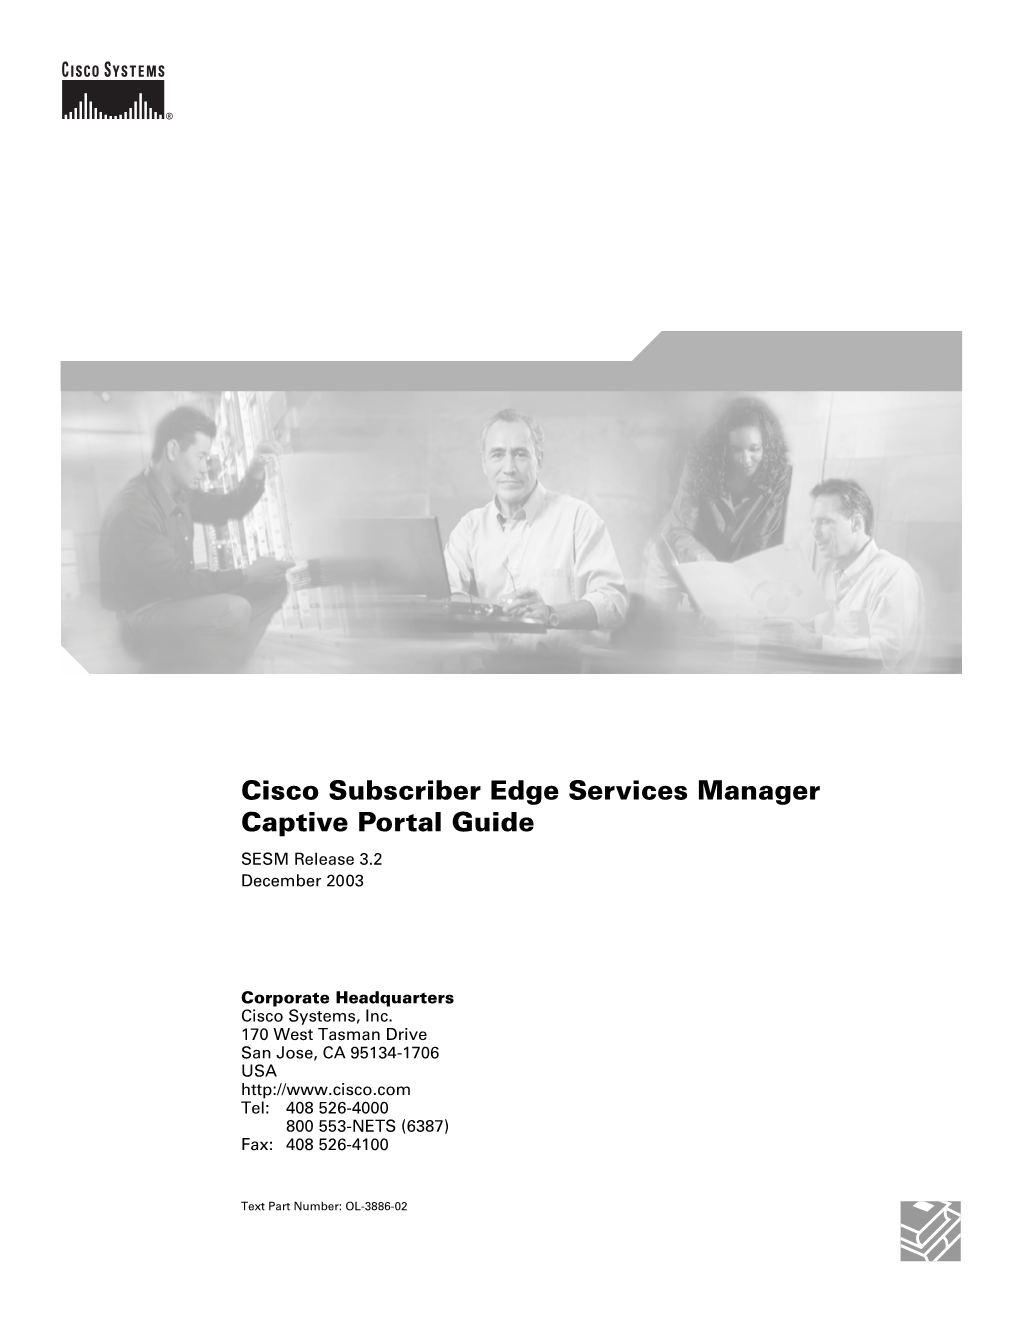 Cisco Subscriber Edge Services Manager Captive Portal Guide SESM Release 3.2 December 2003